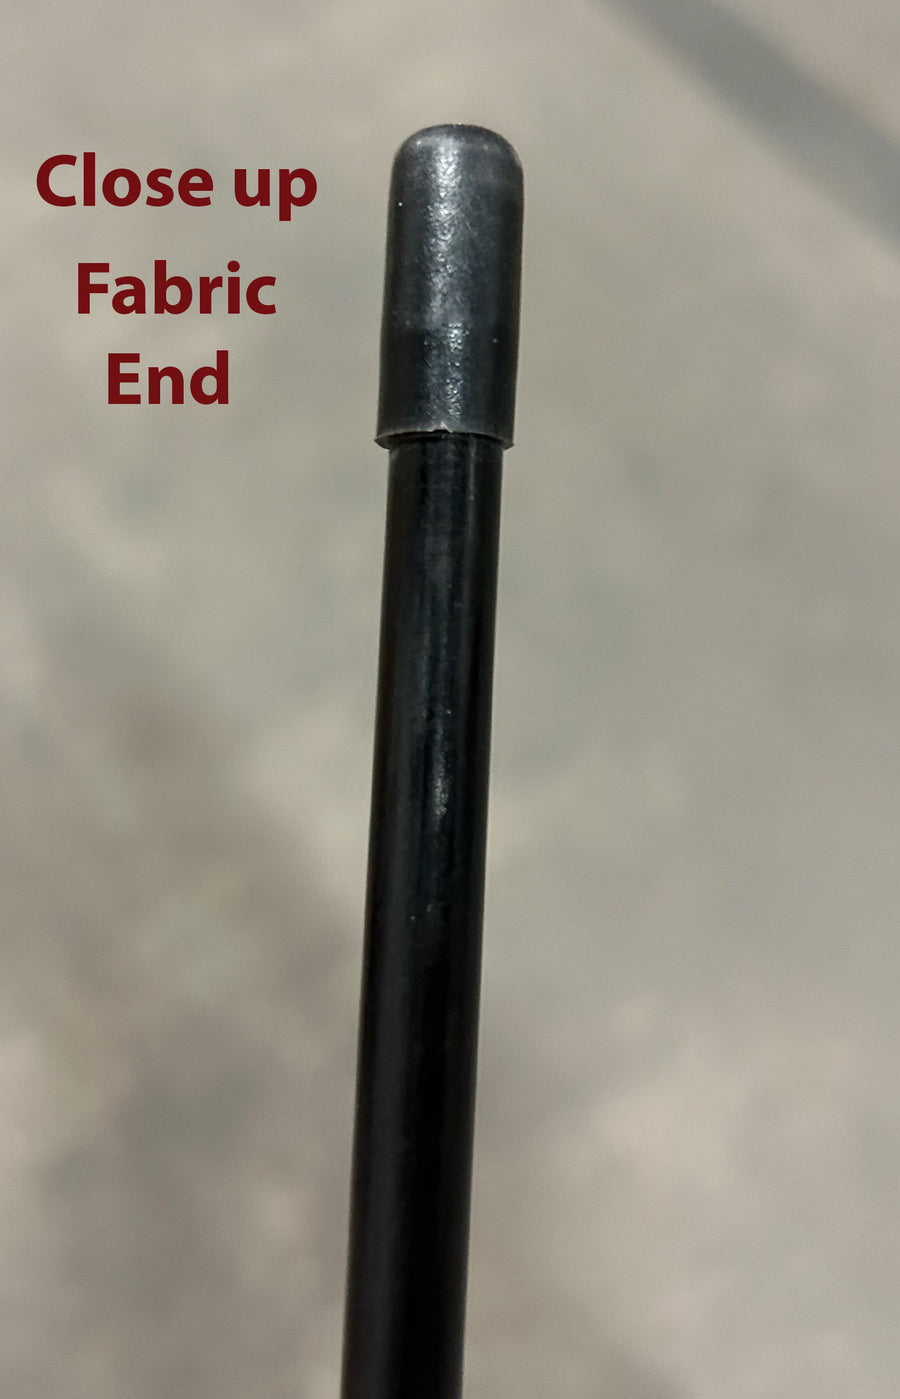 HydeOut Blind - fiberglass rod replacements